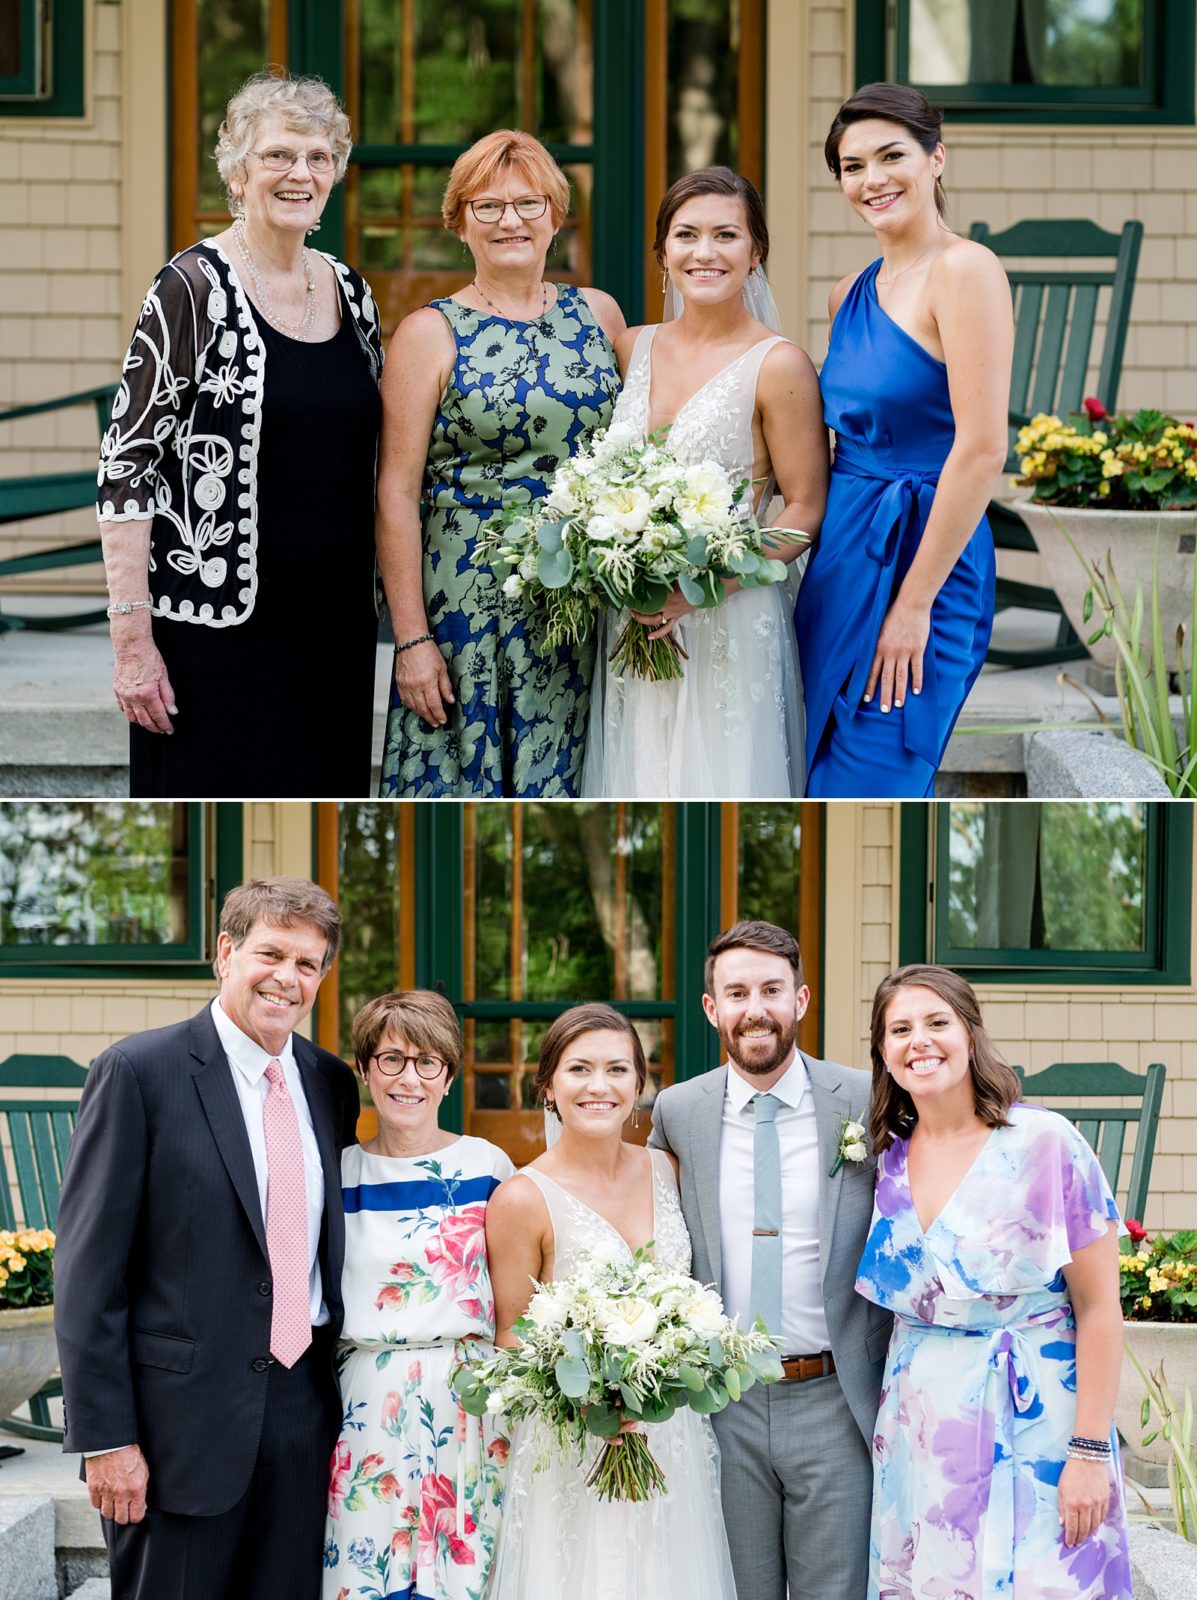 Our (Covid) Wedding Story: A Coastal Maine Microwedding